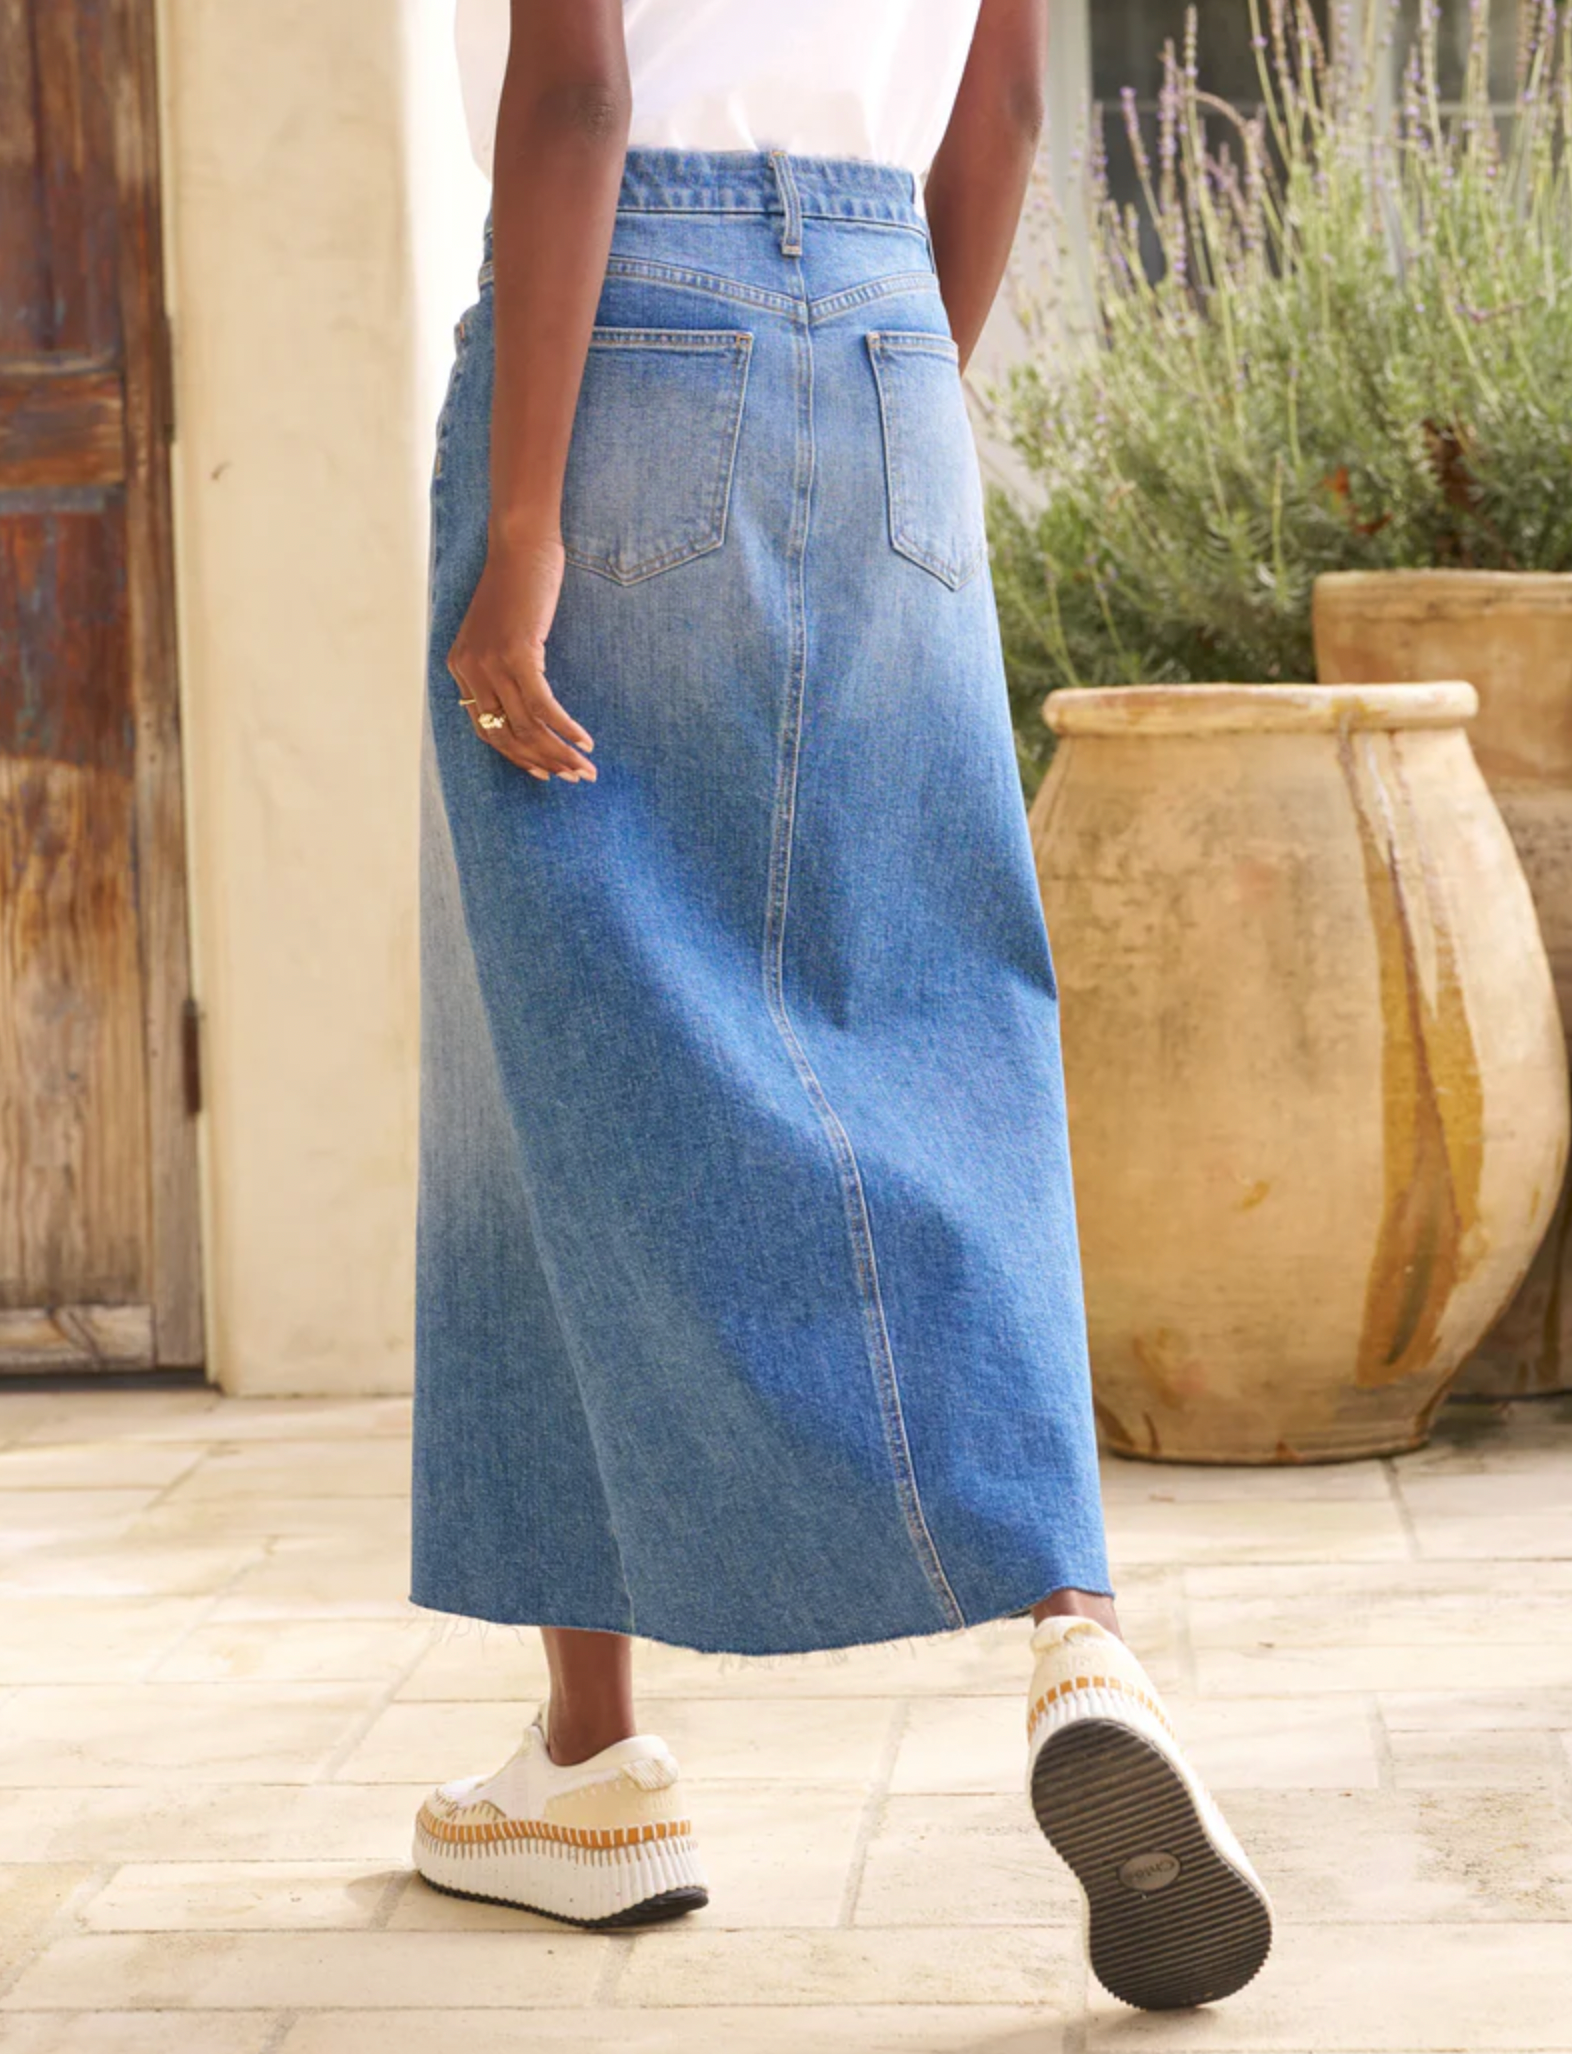 Donny Brook Skirt - 2010 Classic Blue Wash